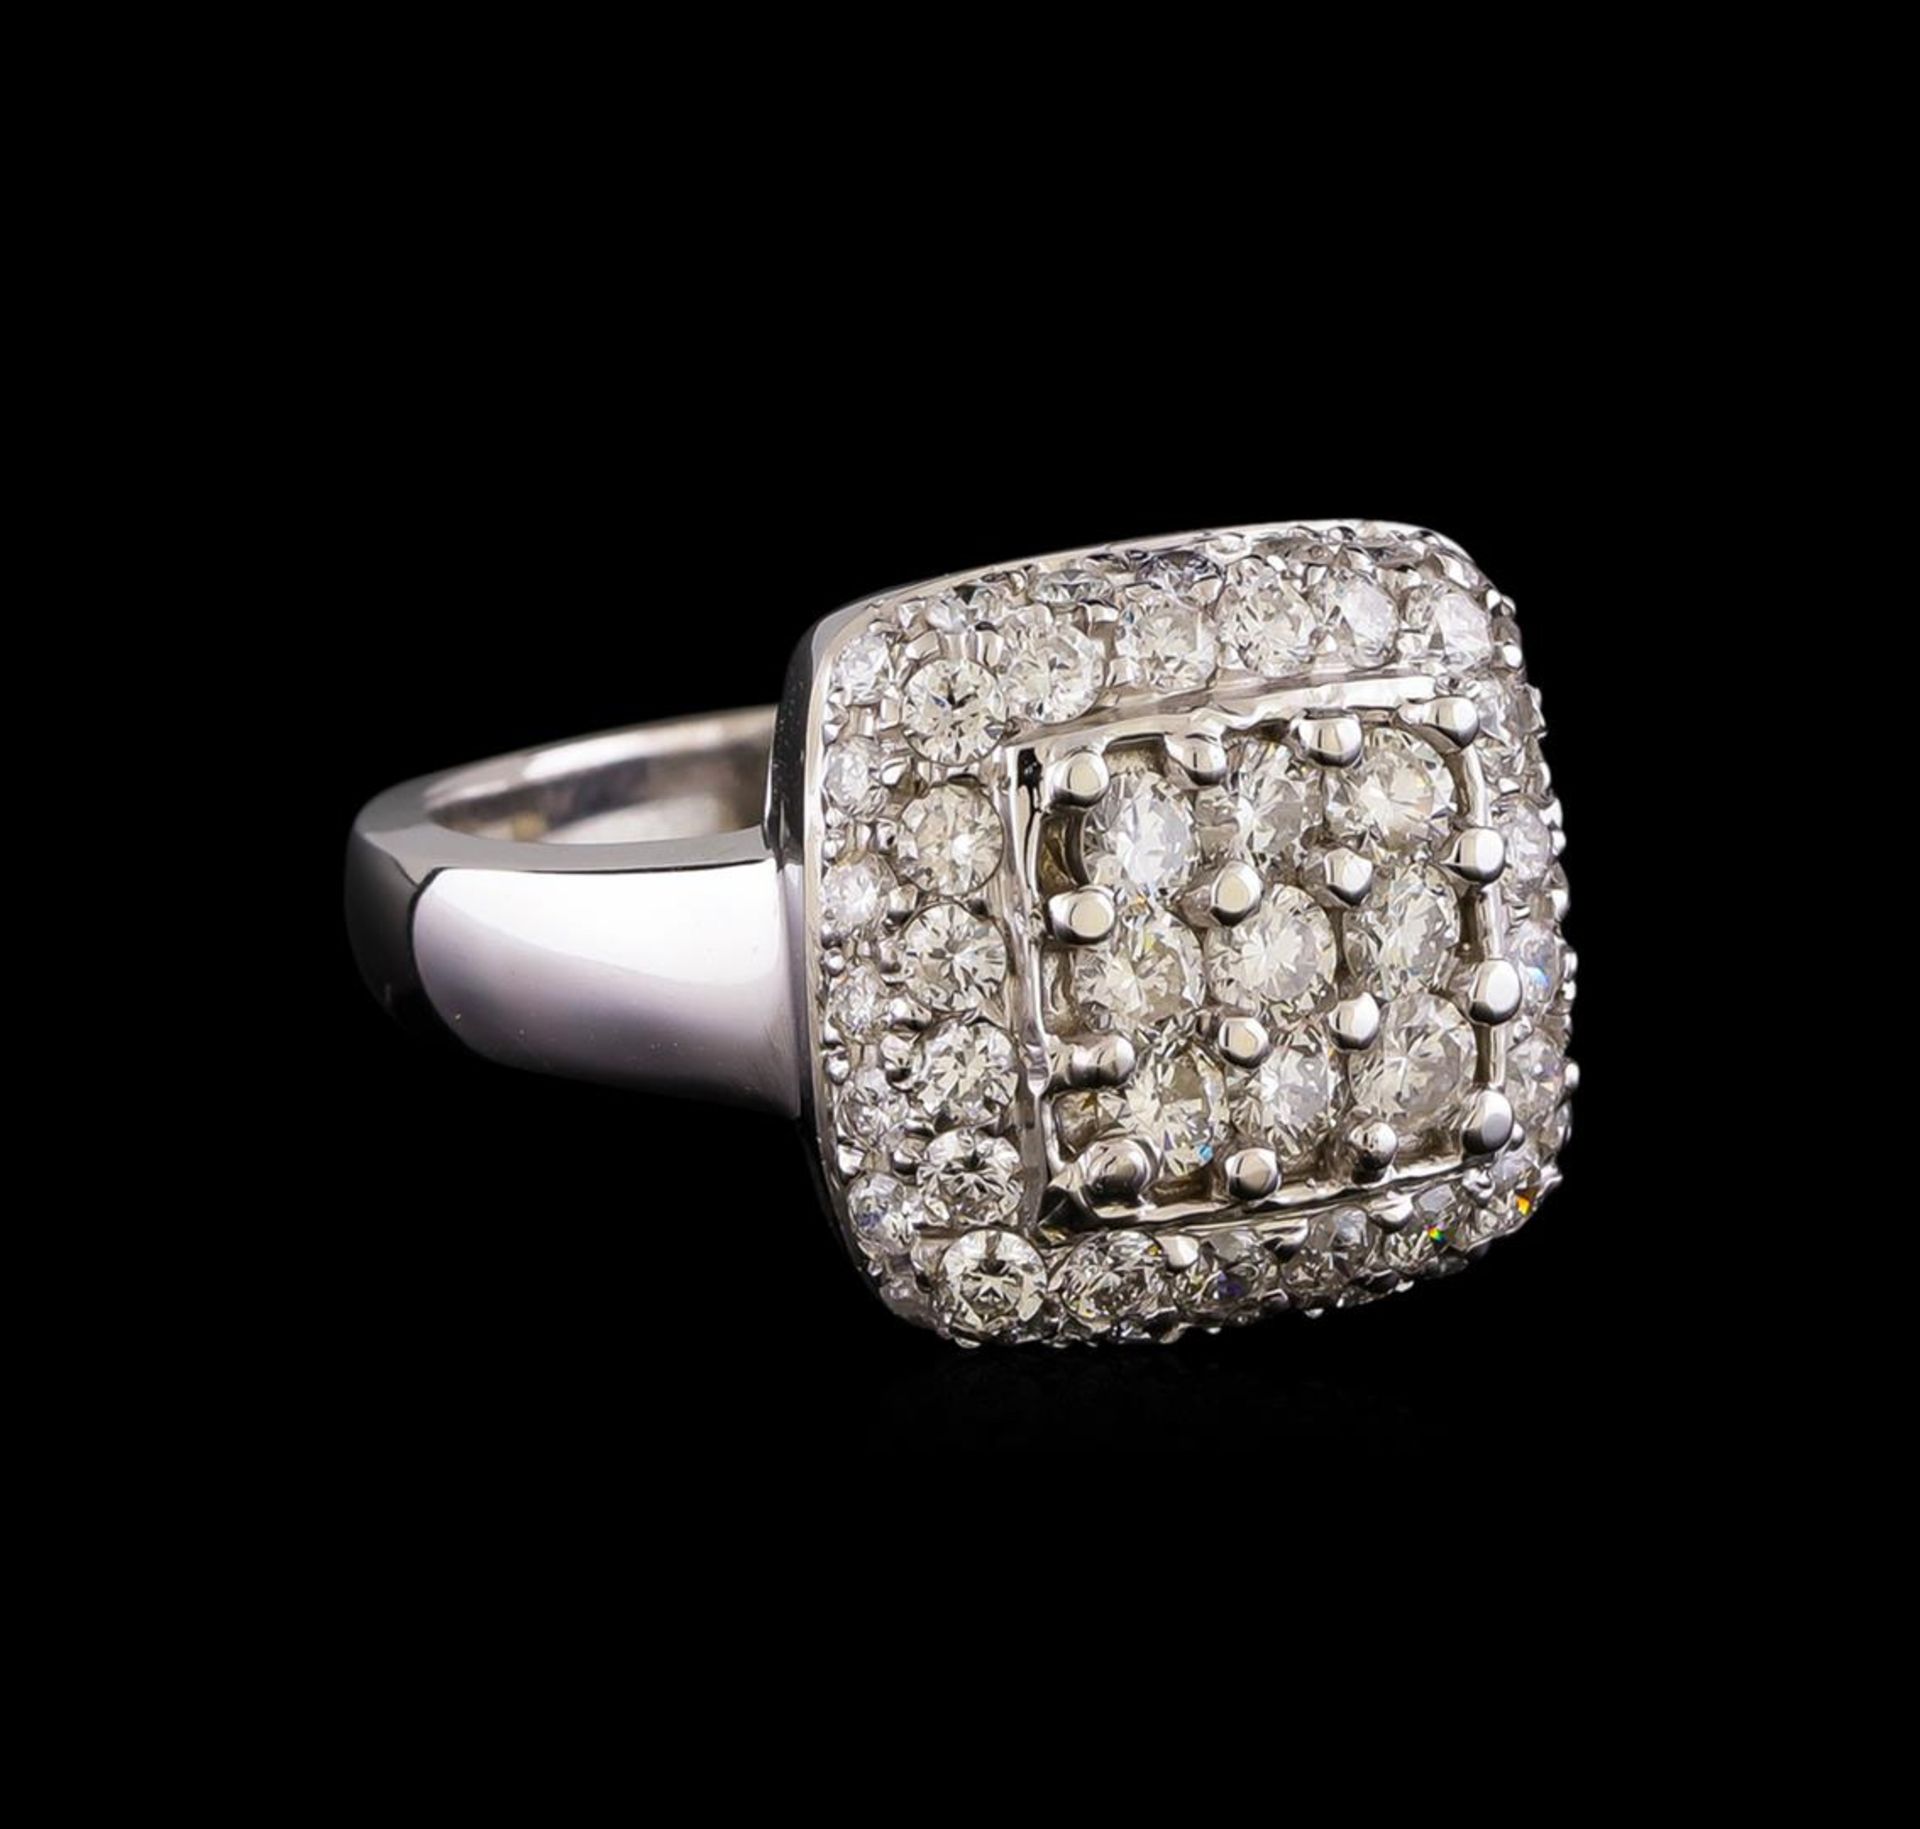 14KT White Gold 1.55 ctw Diamond Ring - Image 2 of 10